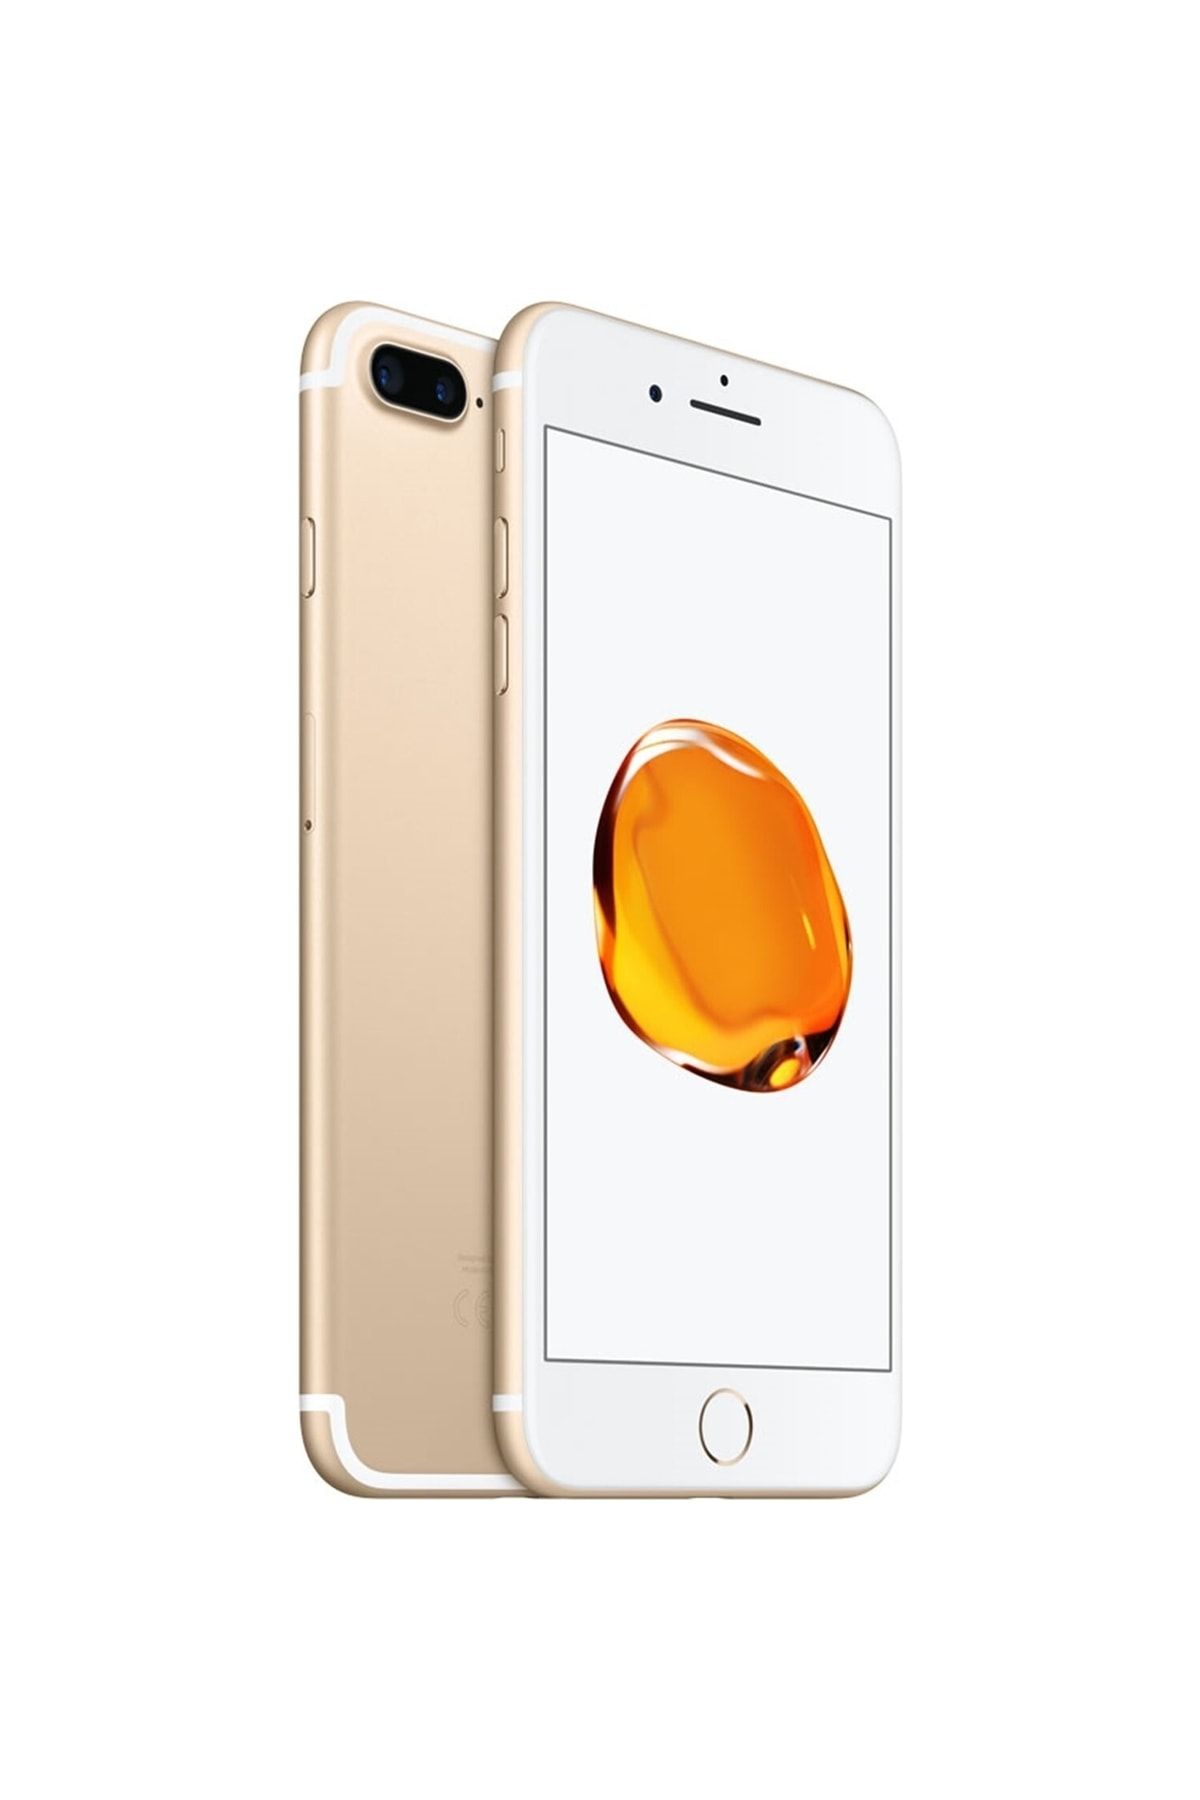 Apple Yenilenmiş iPhone 7 Plus 32 Gold (12 AY GARANTİLİ) B Grade